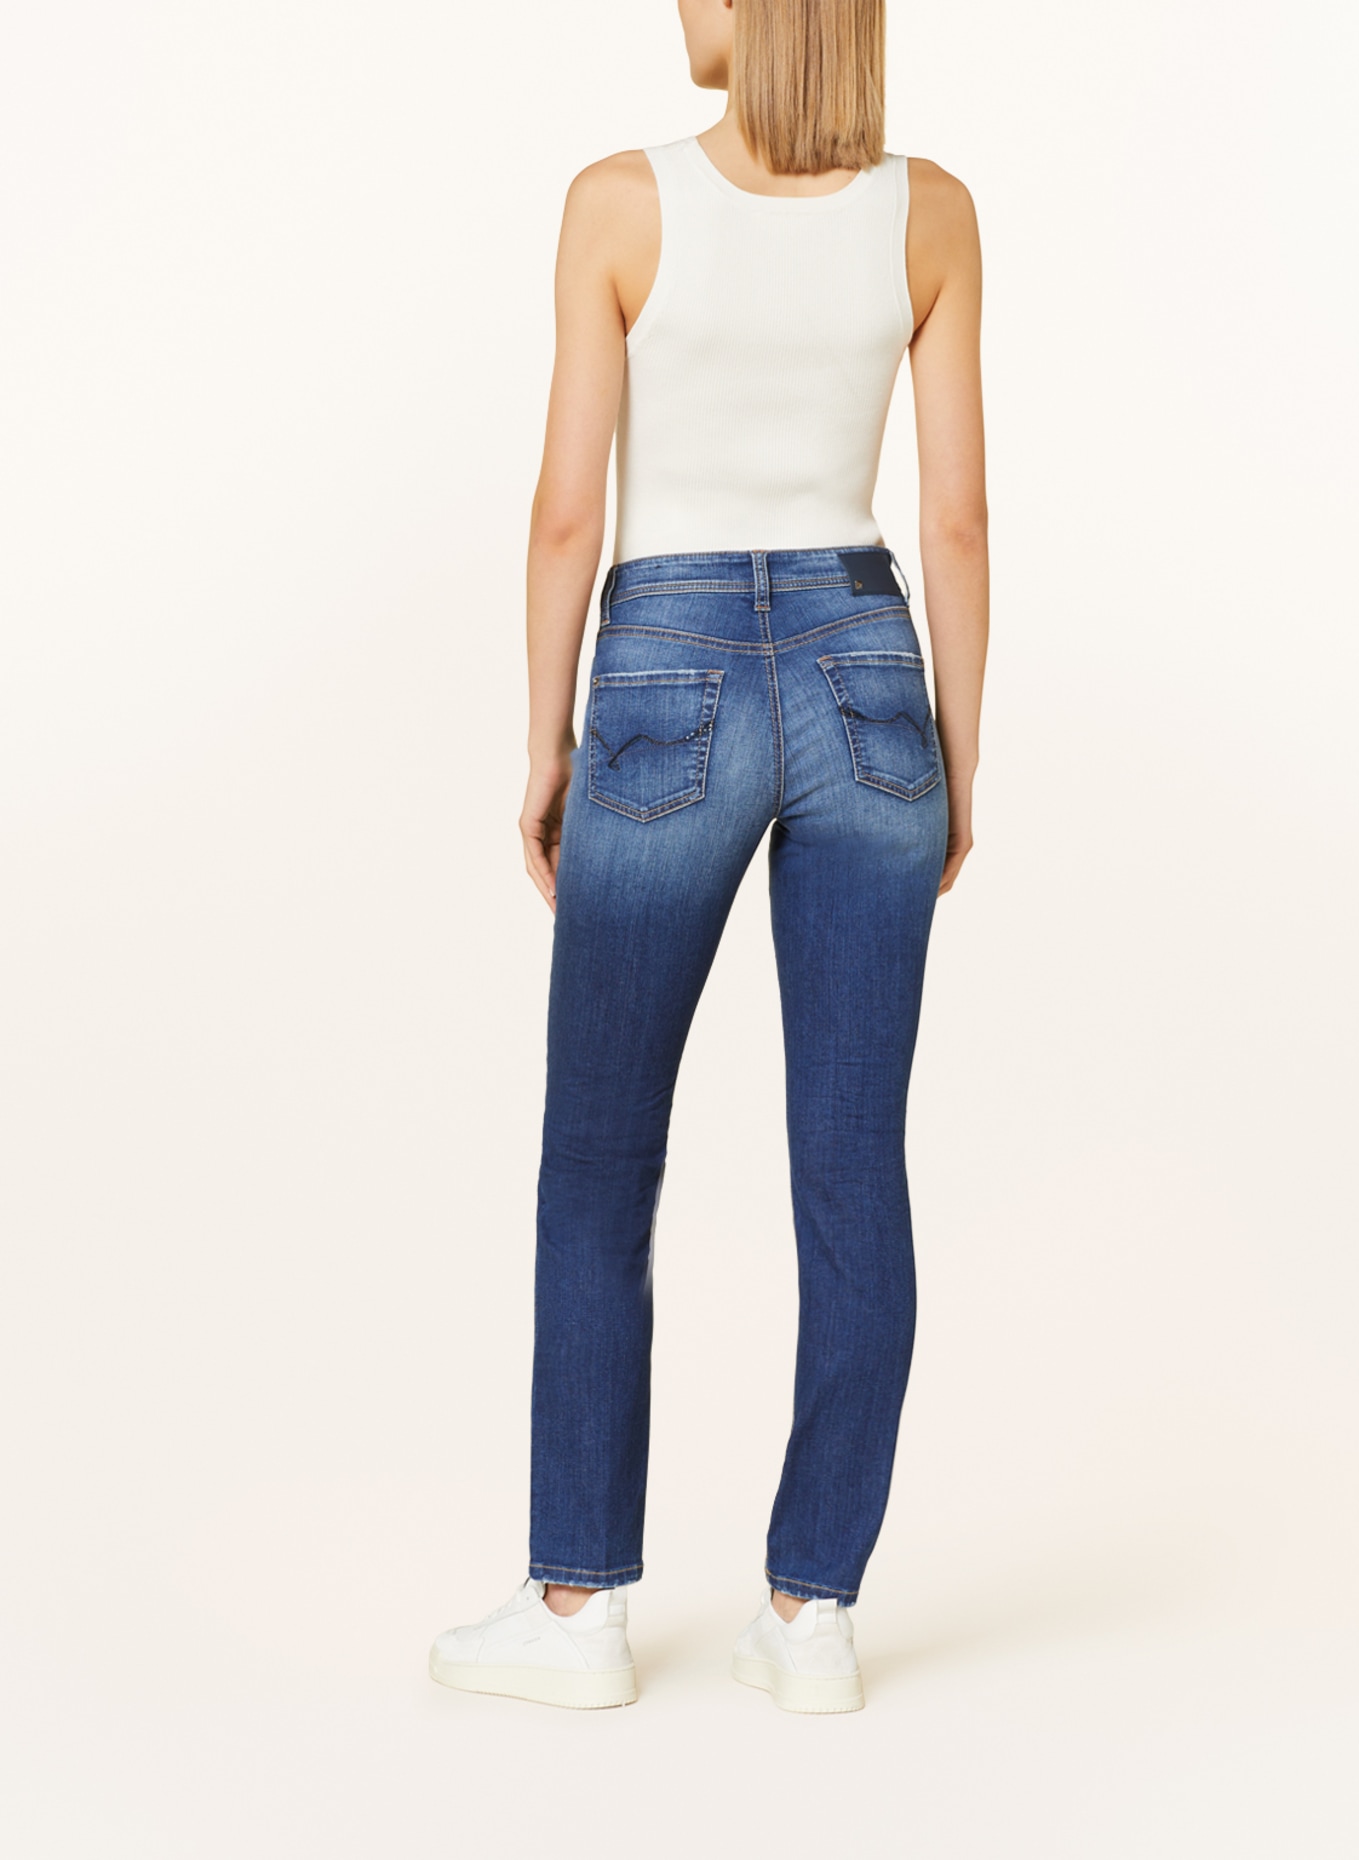 CAMBIO Skinny Jeans PARLA mit Pailletten, Farbe: 5061 medium contrast splinted (Bild 3)